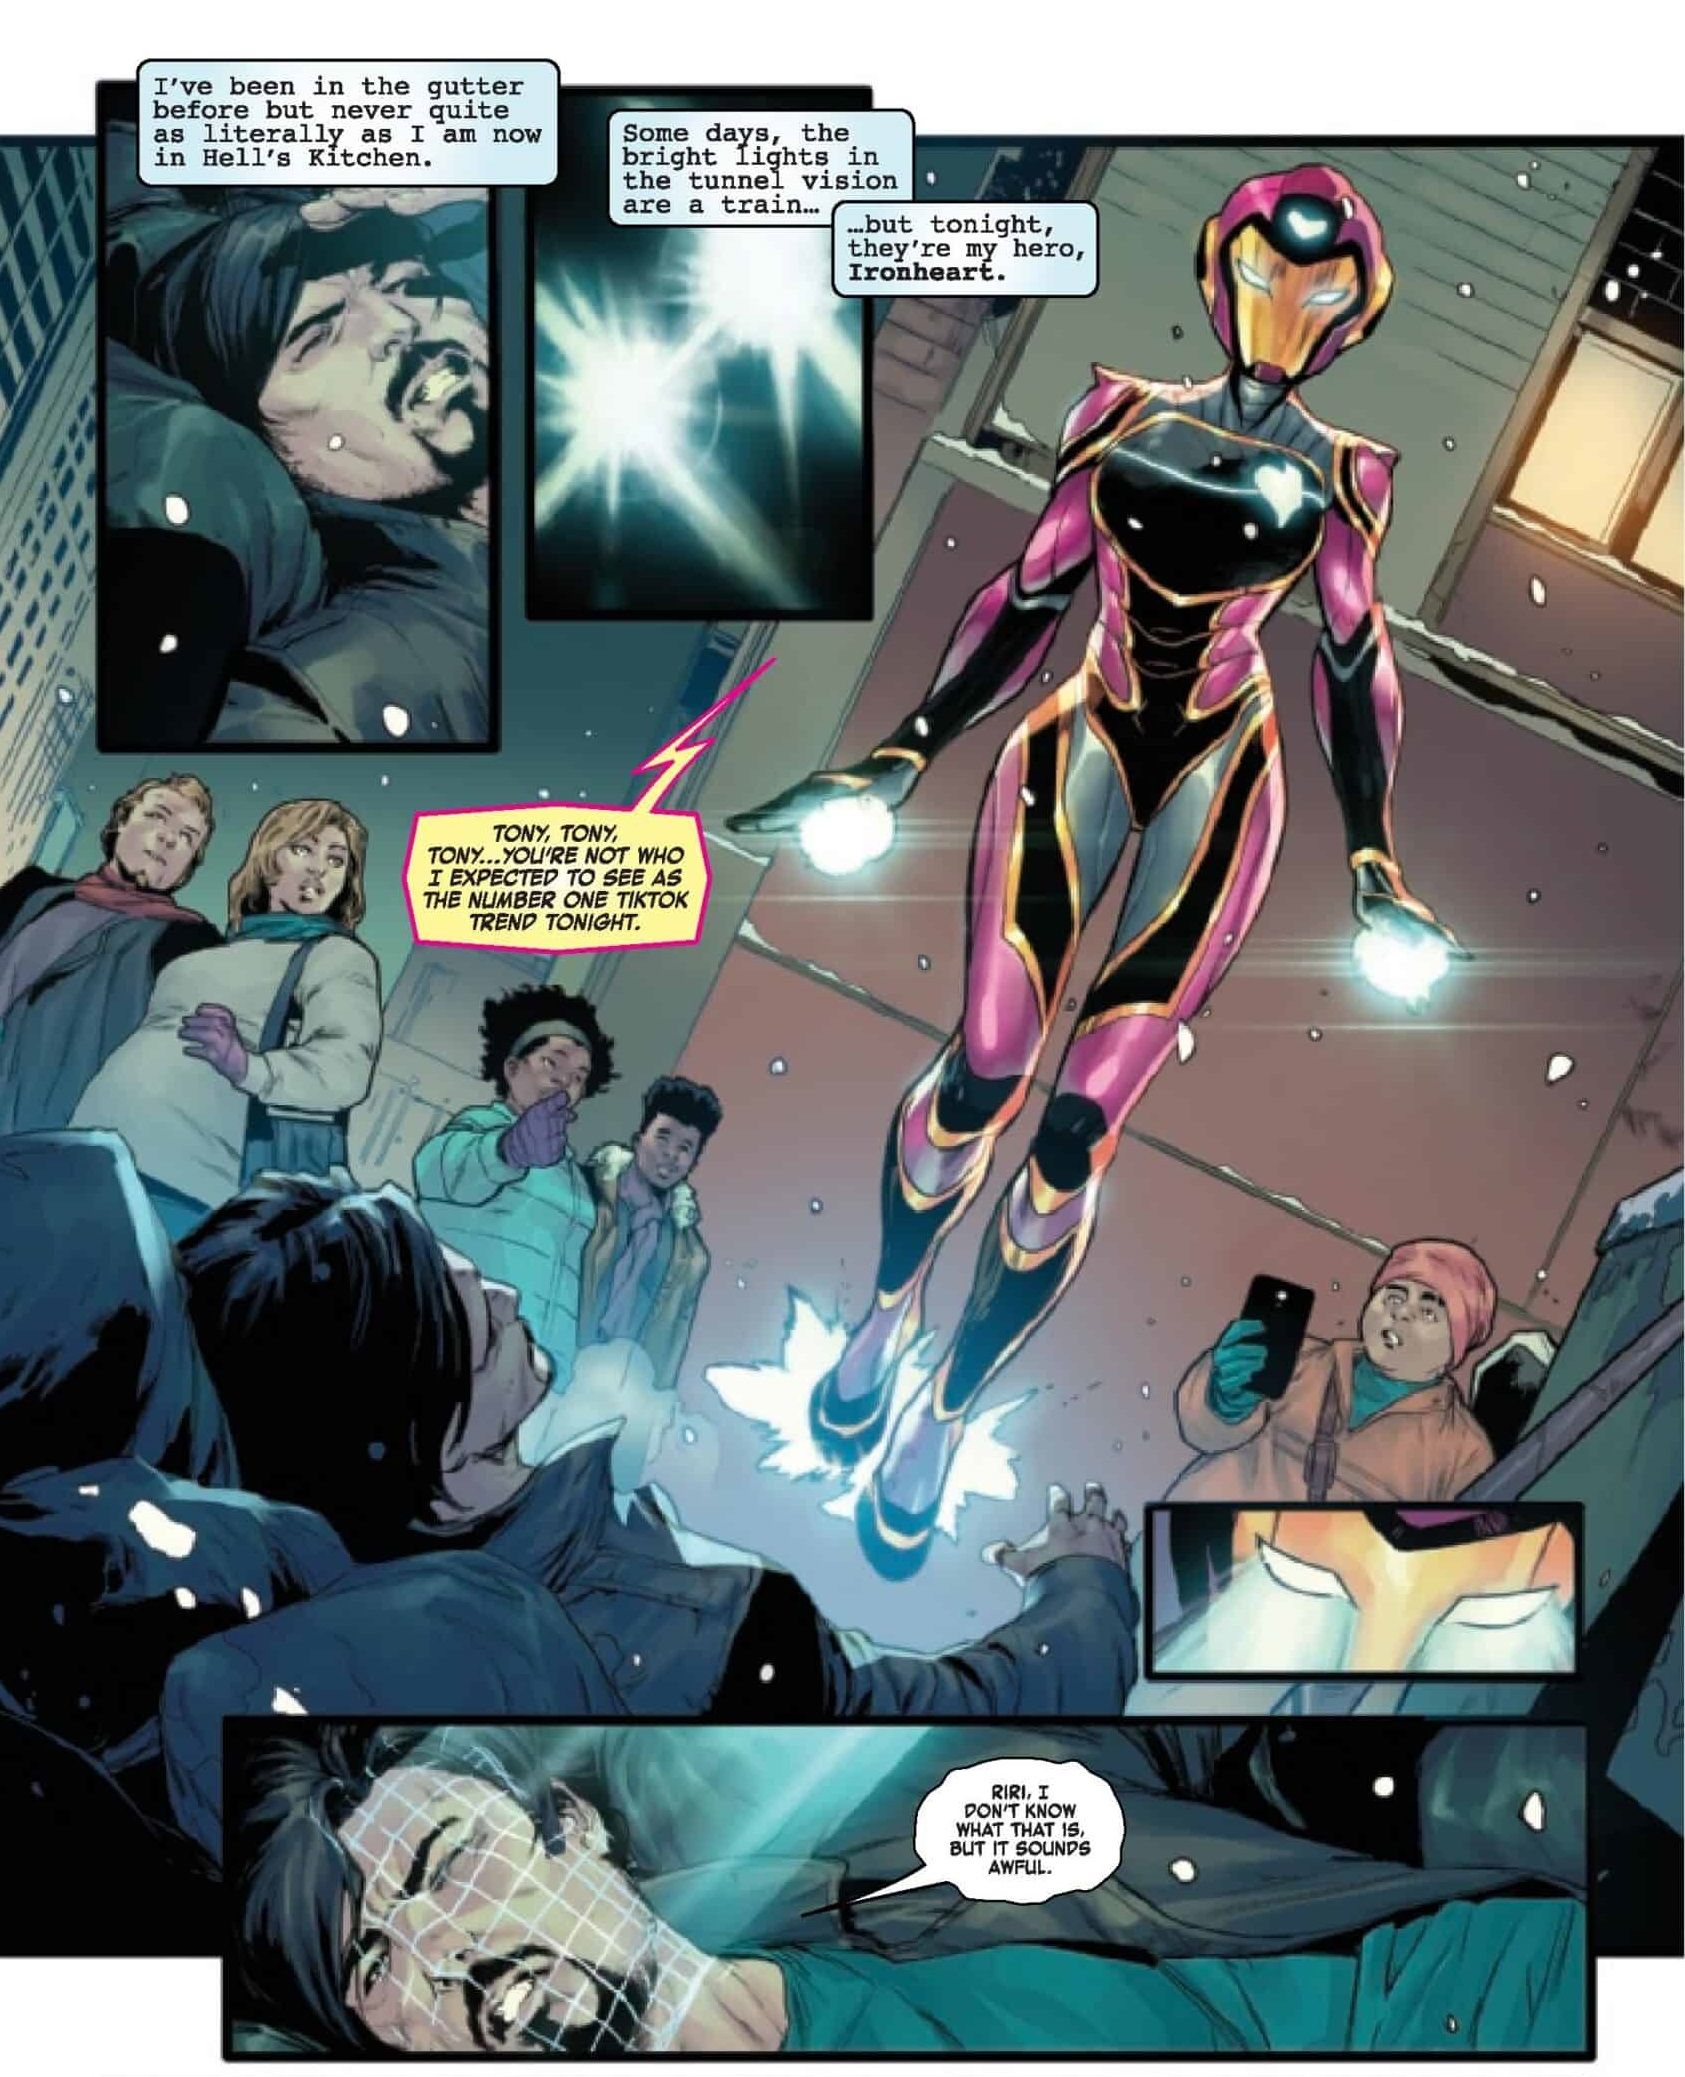 Ironheart finding Tony Stark in Invincible Iron Man #2